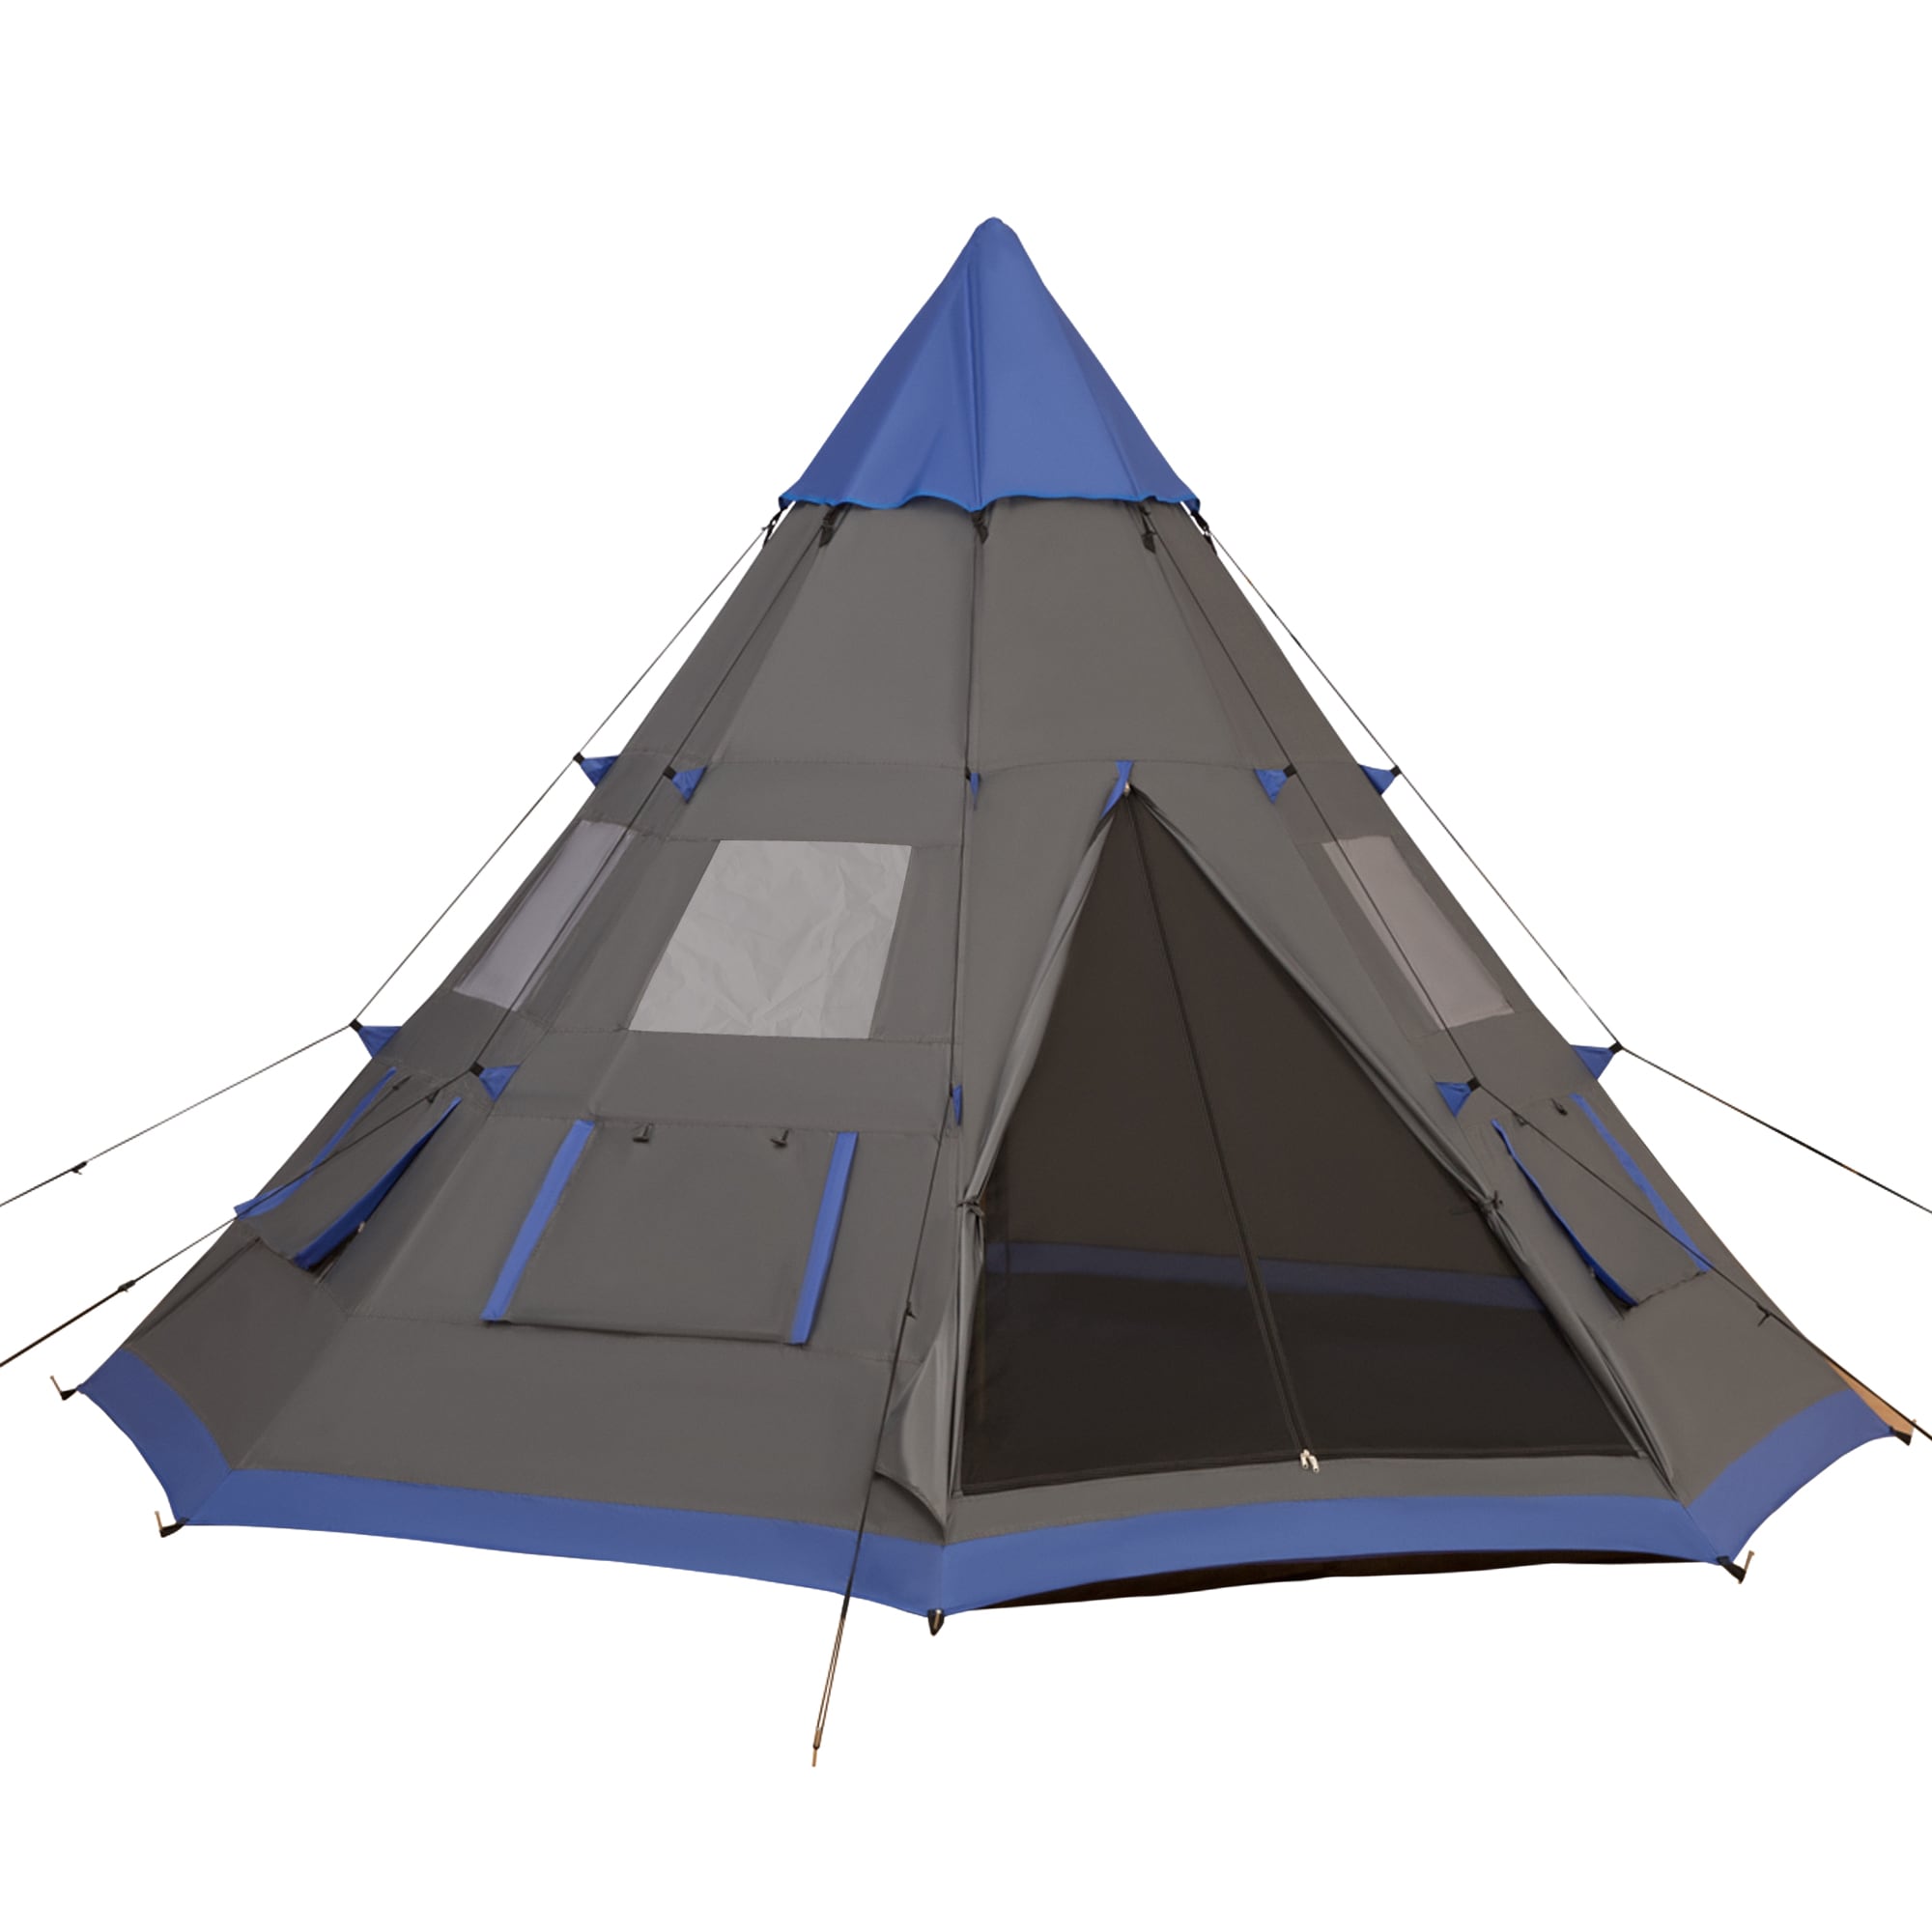 2 person tent Tipi camping tent beautiful design mesh door & vents waterproof 